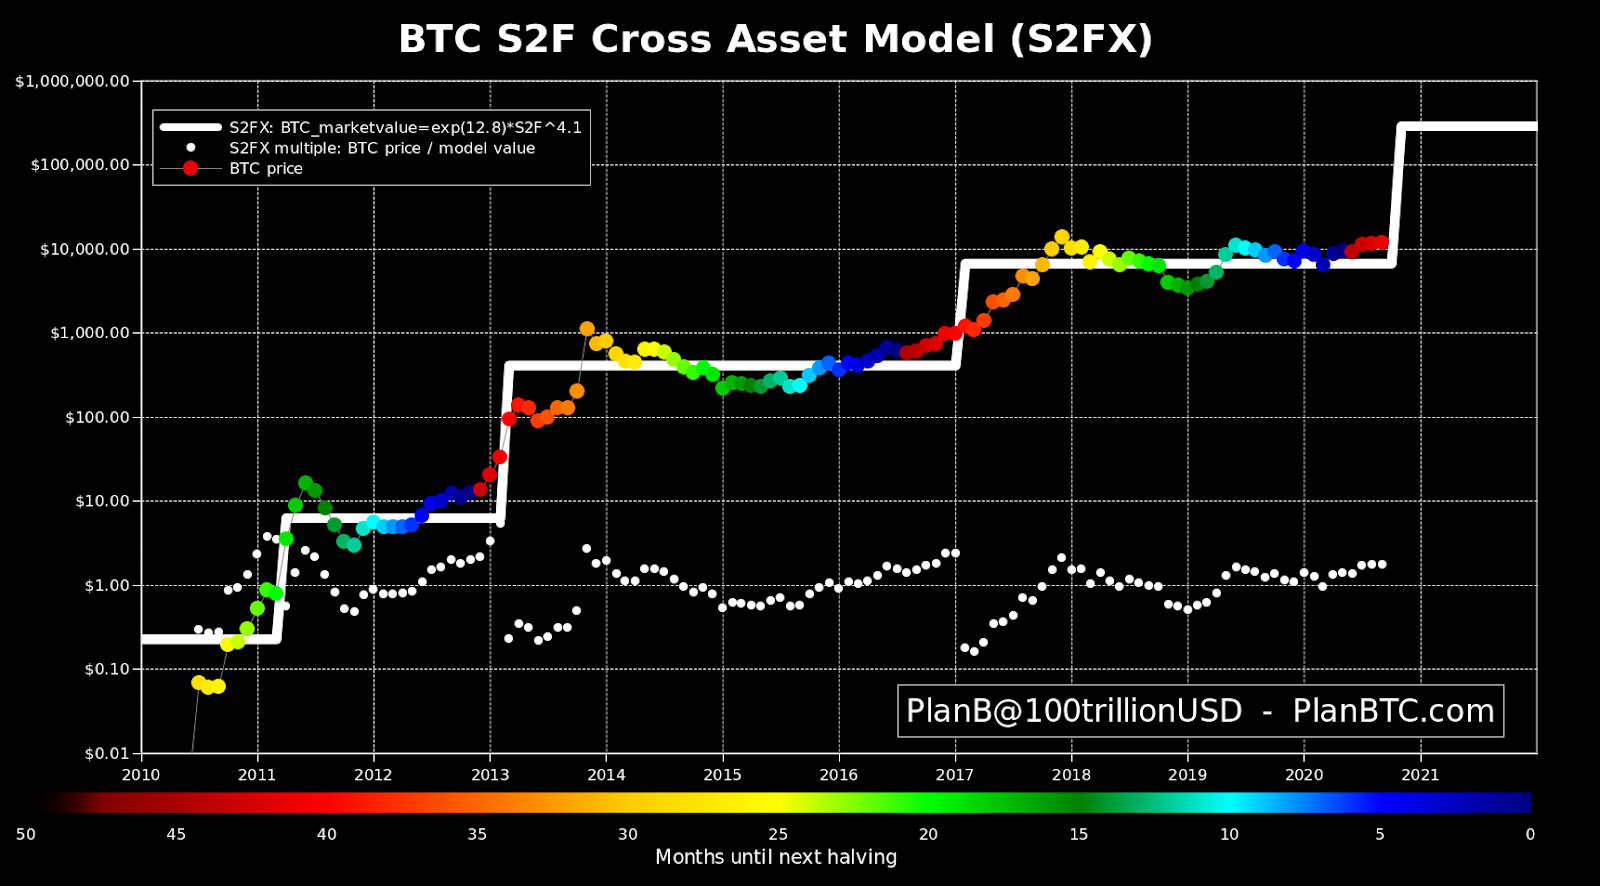 Bitcoin S2FX model as of Sept. 1, 2020